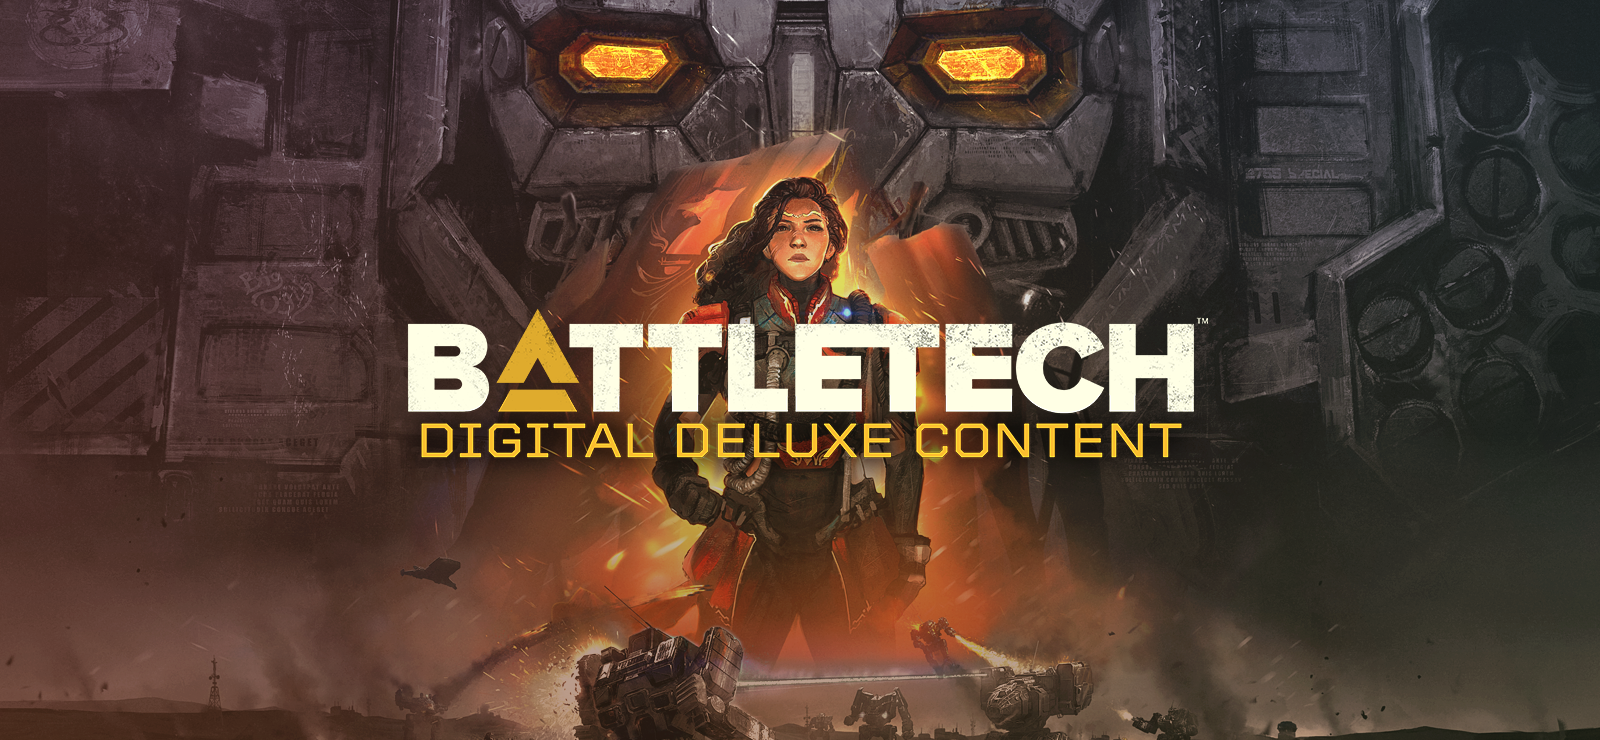 BATTLETECH - Digital Deluxe Content